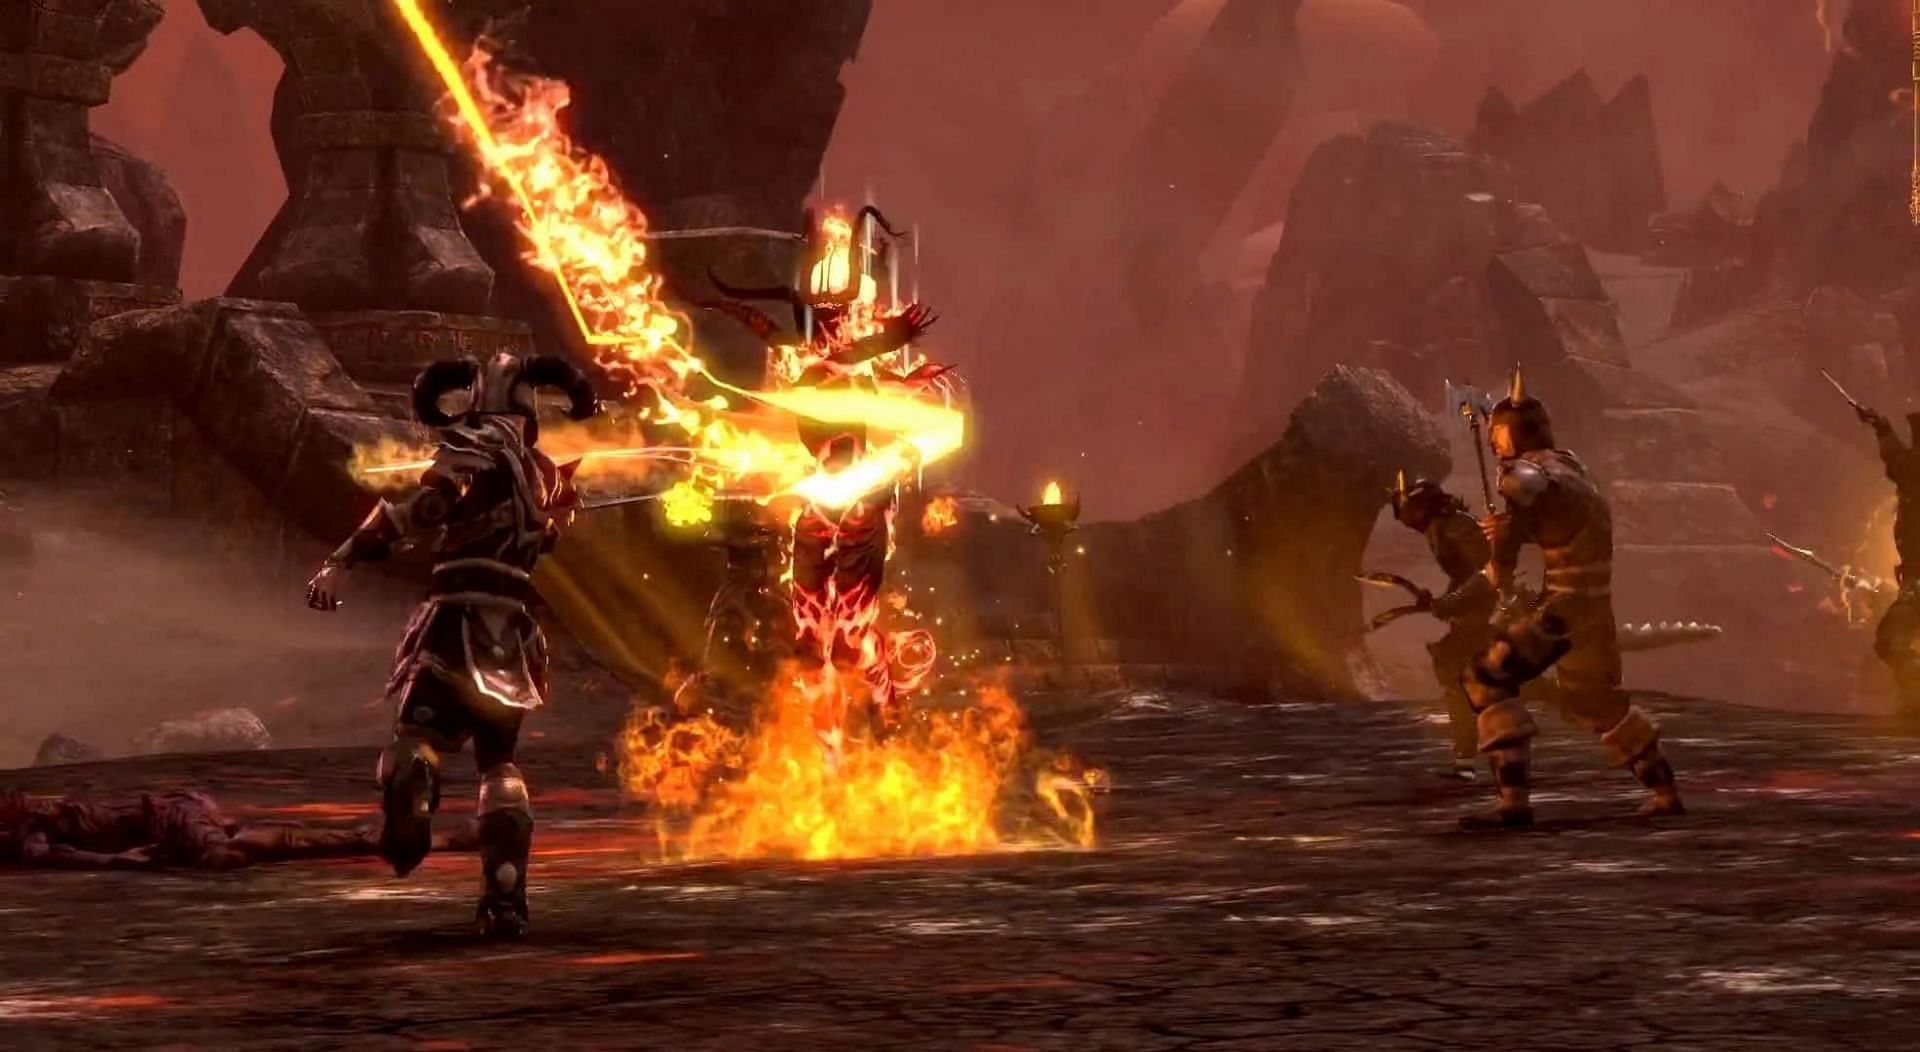 Dragonknights can harness flame-based abilities like Flame Lash against enemies (Image via ZeniMax Online Studios)